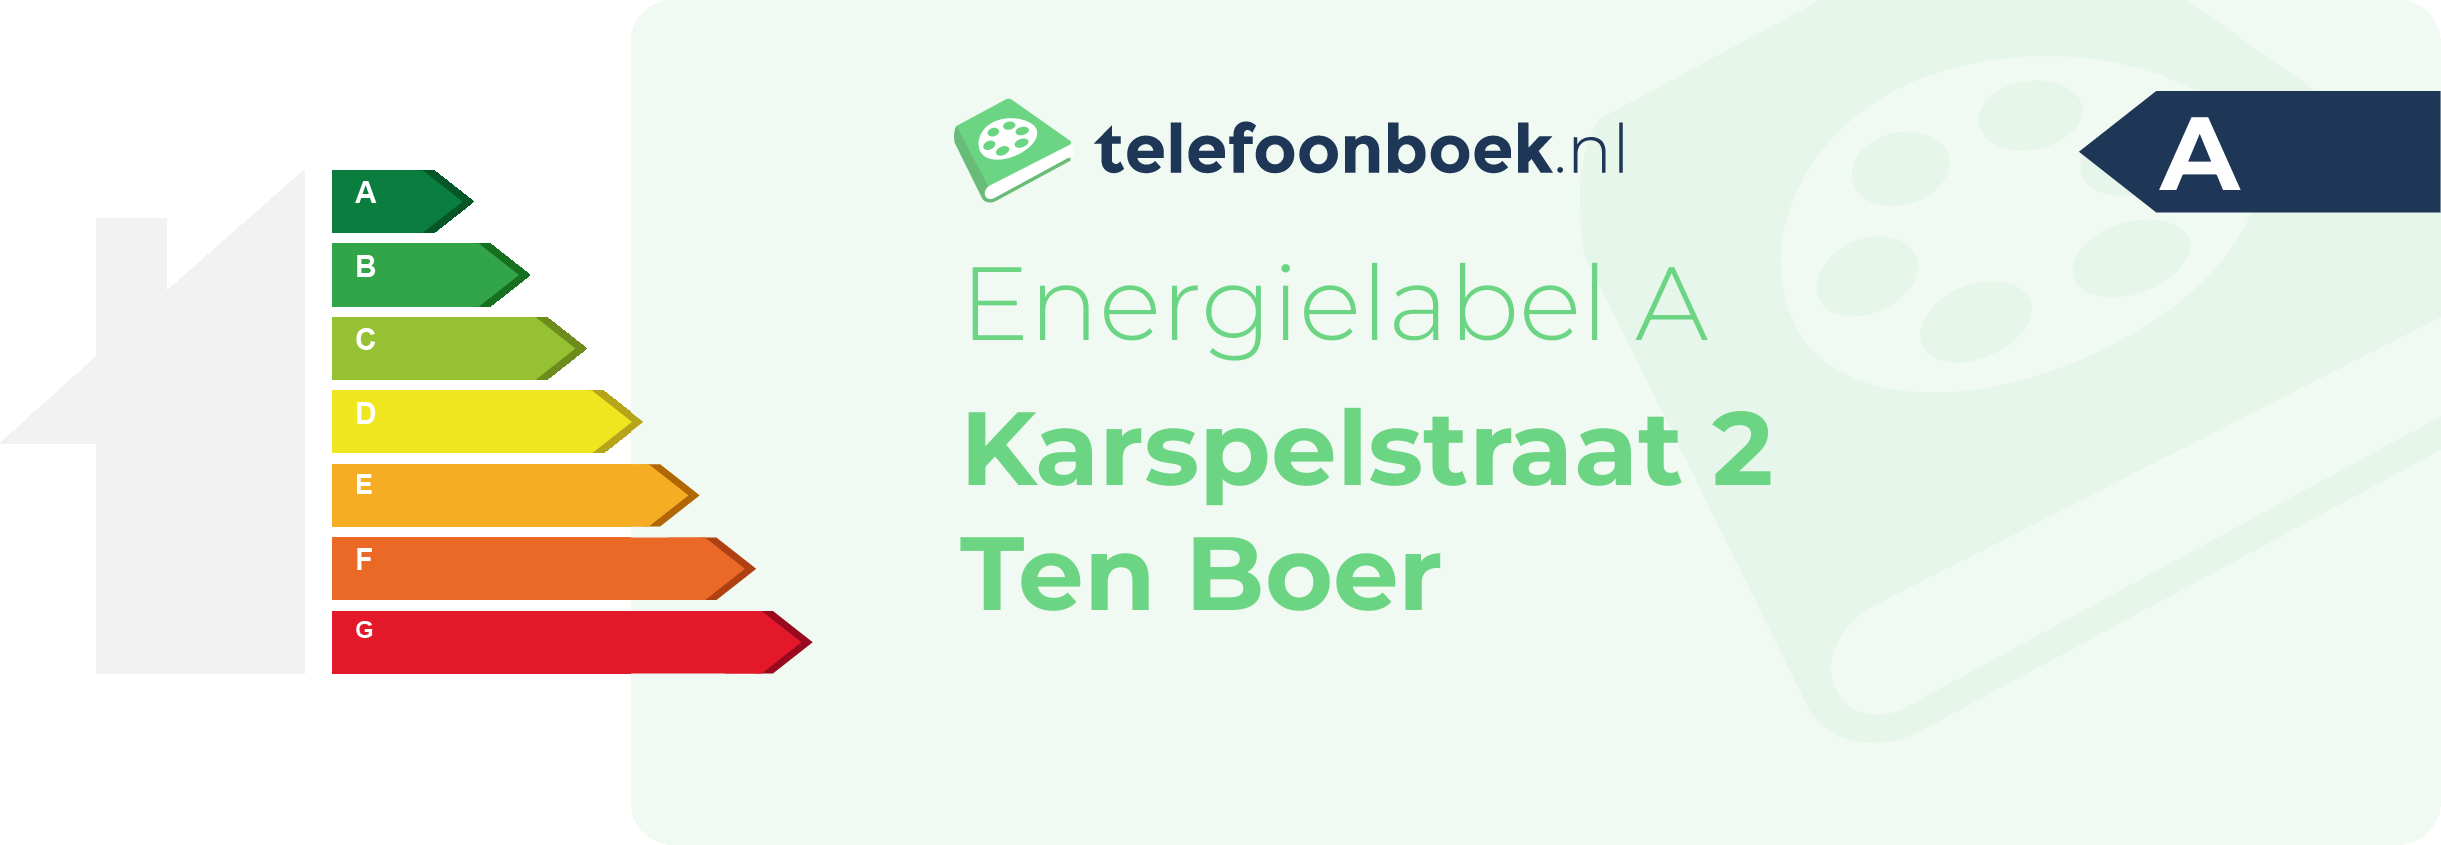 Energielabel Karspelstraat 2 Ten Boer